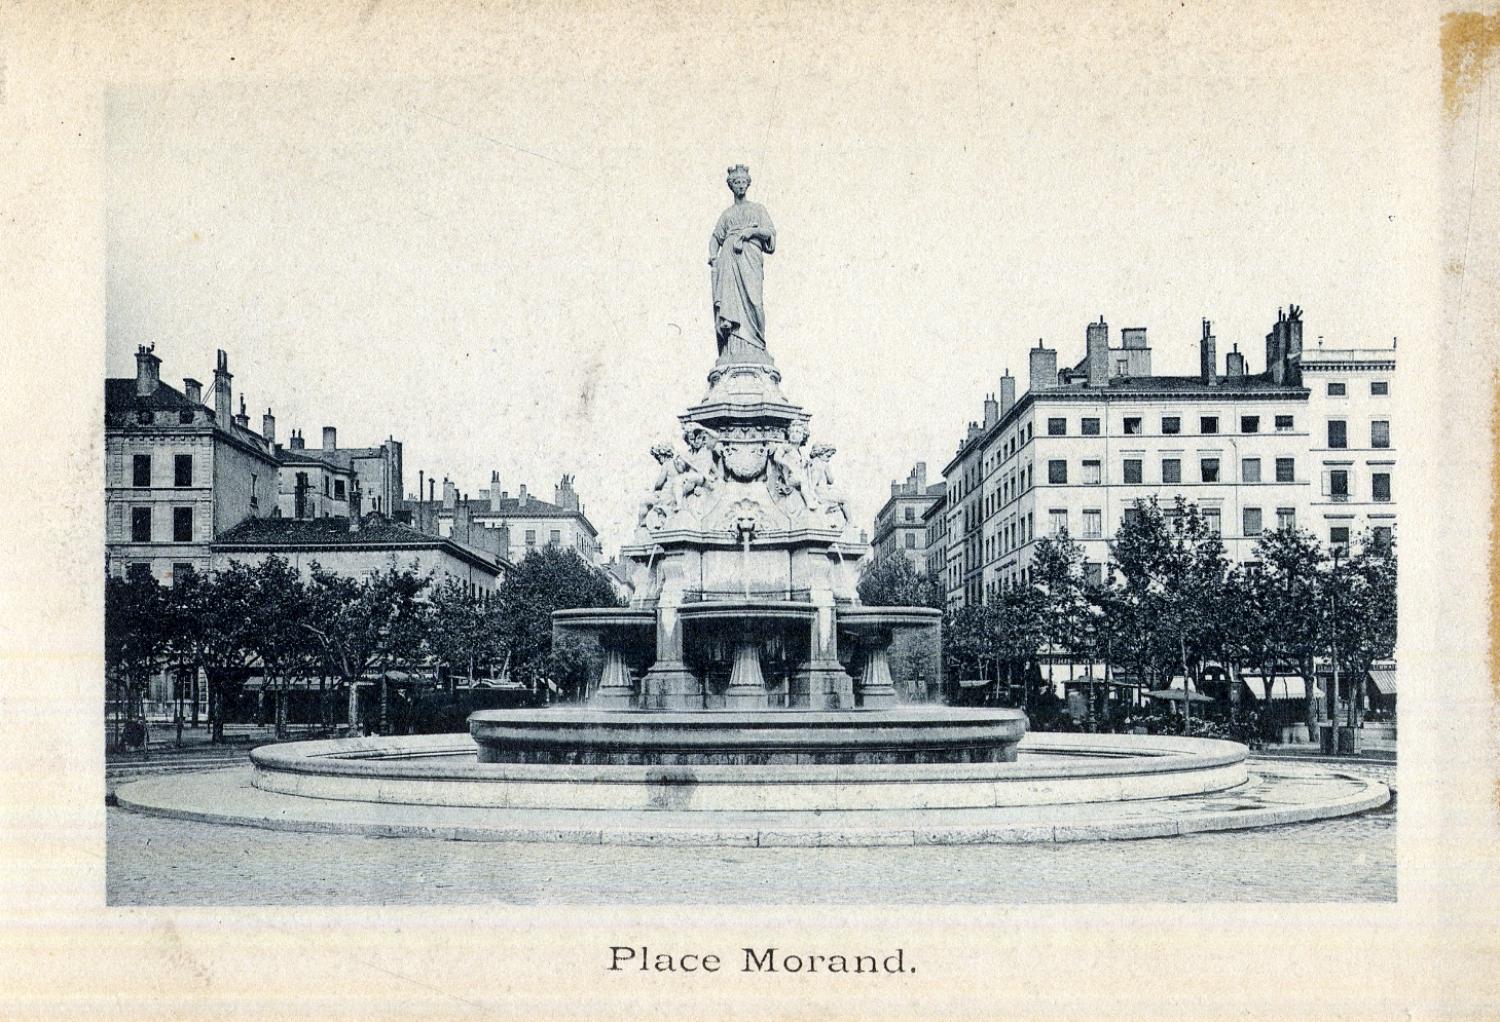 Place Morand